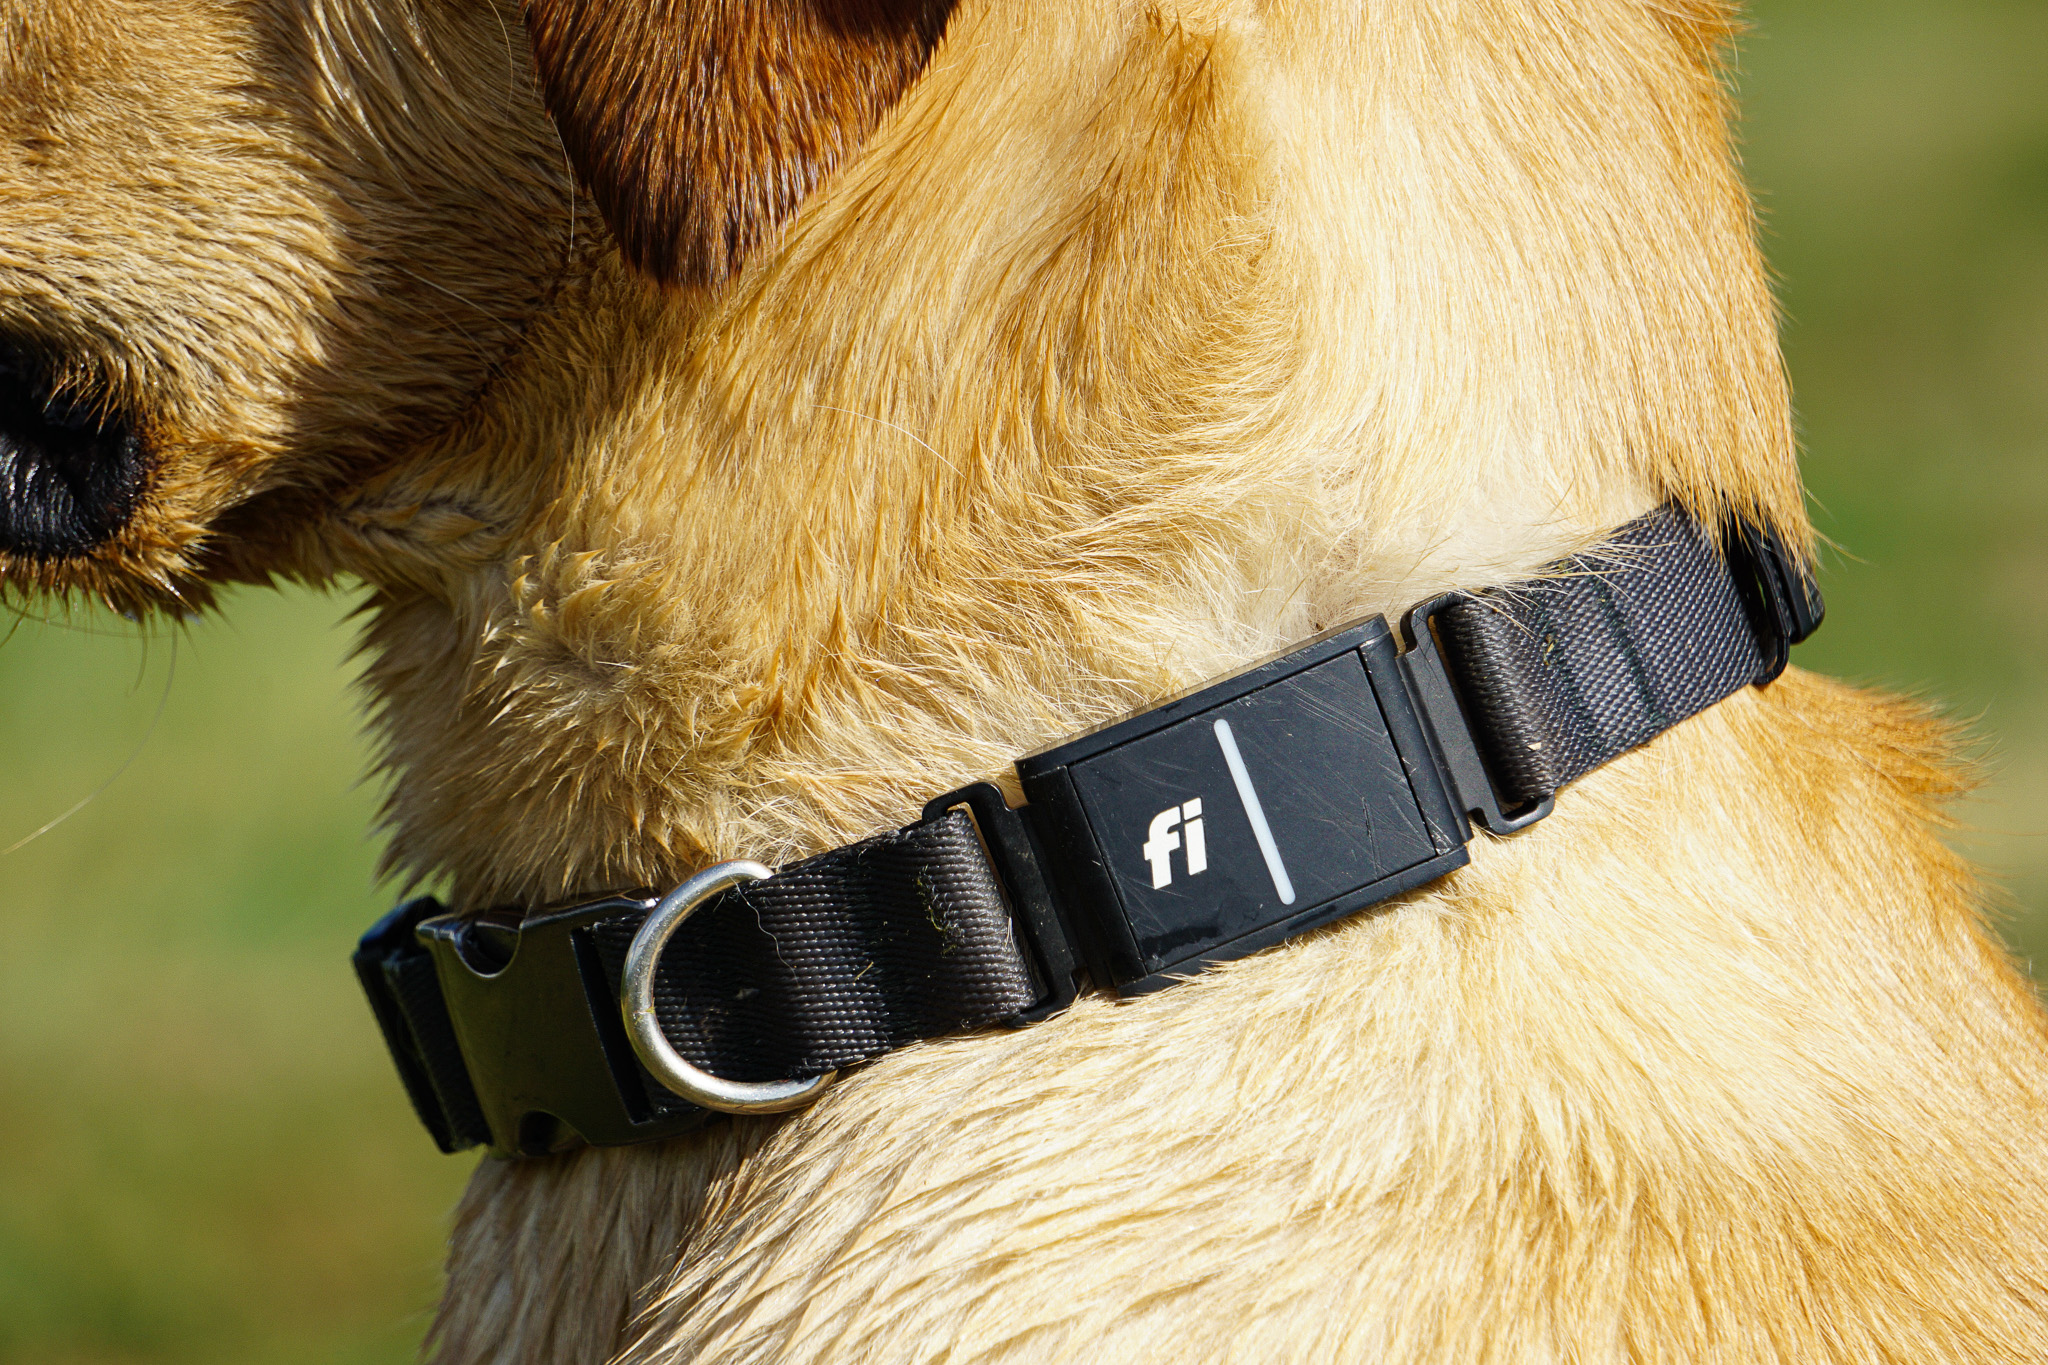 The Fi gps dog collar on a lab.